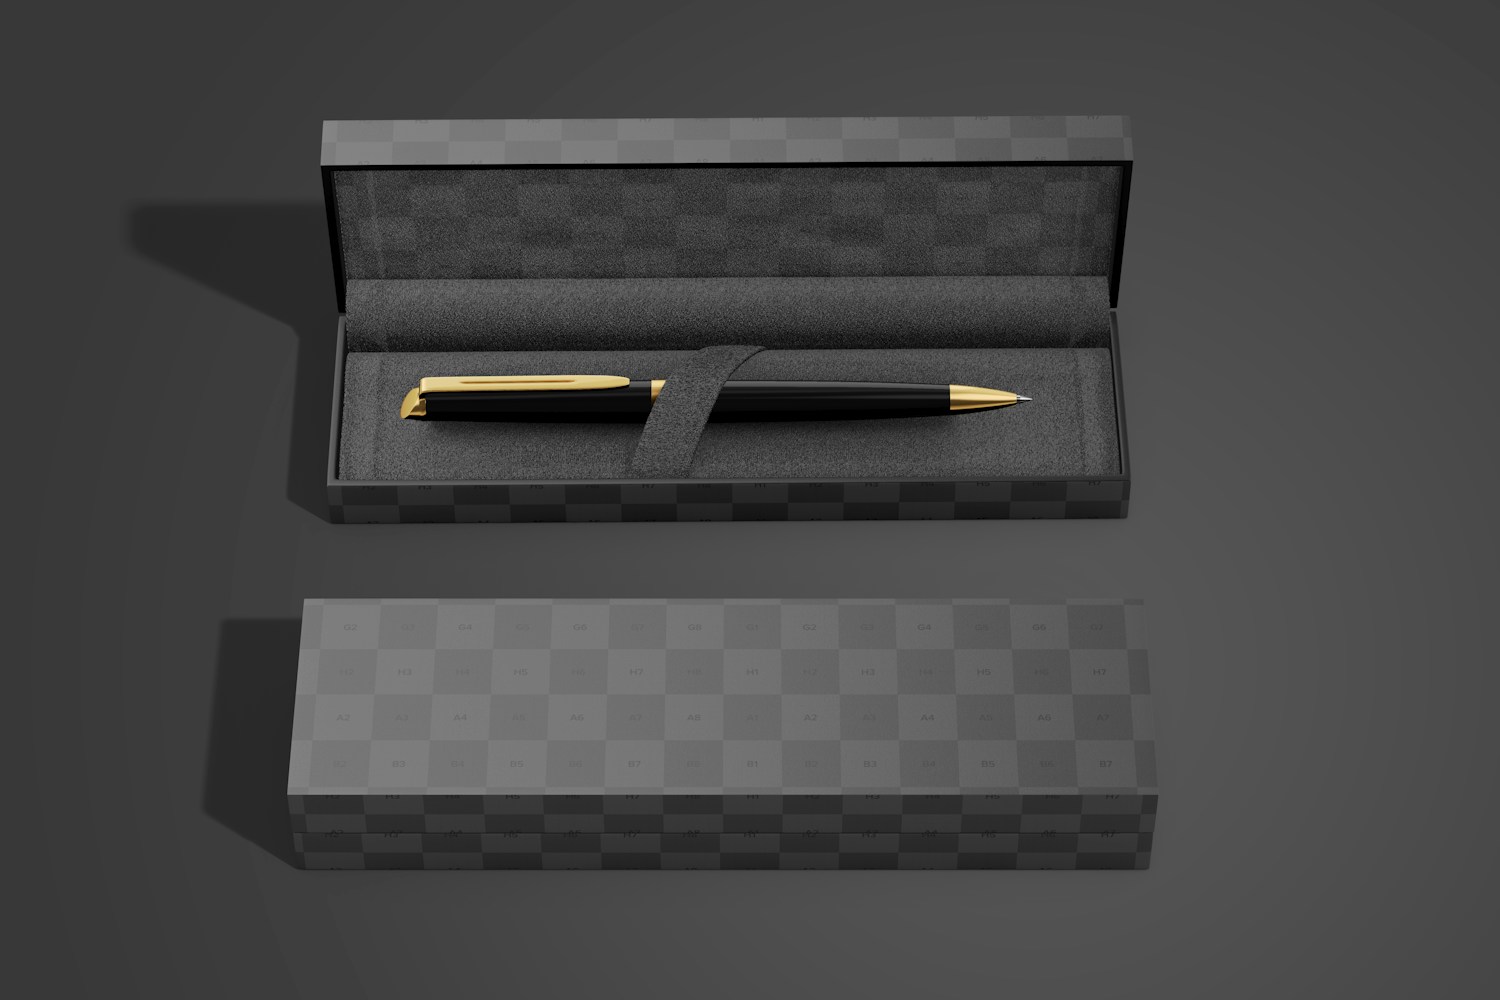 Golden Pen in Boxes Mockup